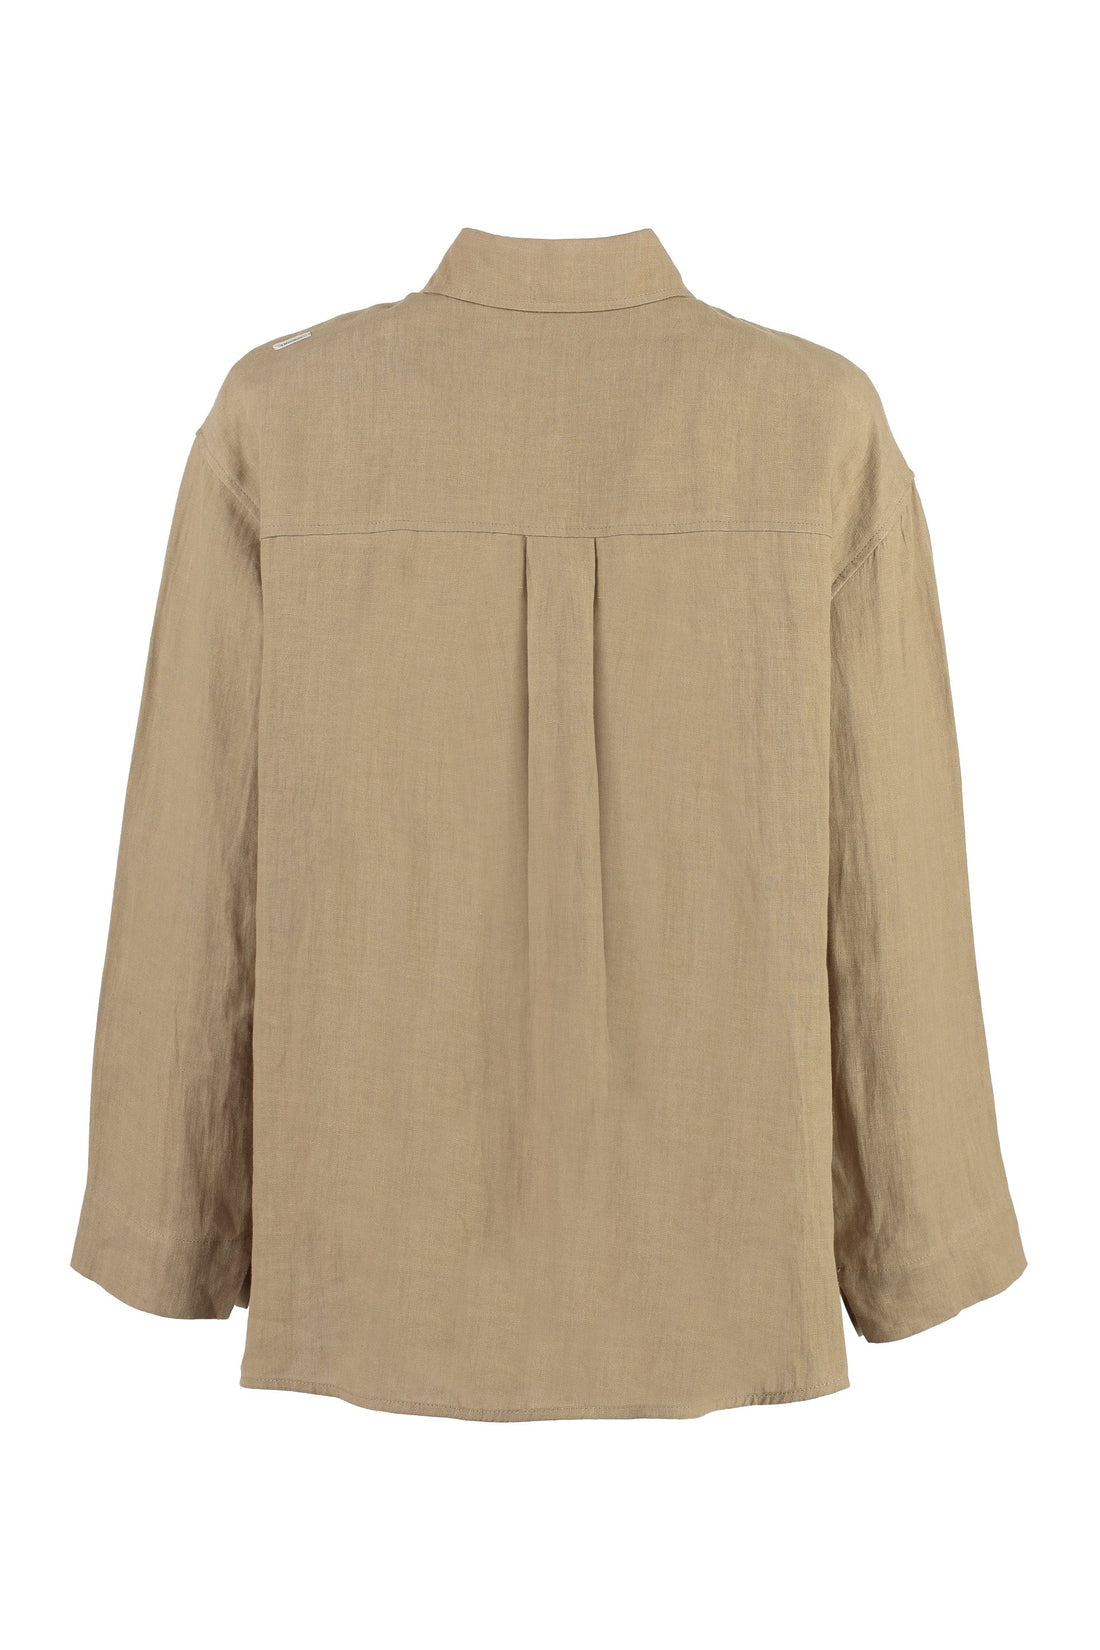 S MAX MARA-OUTLET-SALE-Canard linen shirt-ARCHIVIST